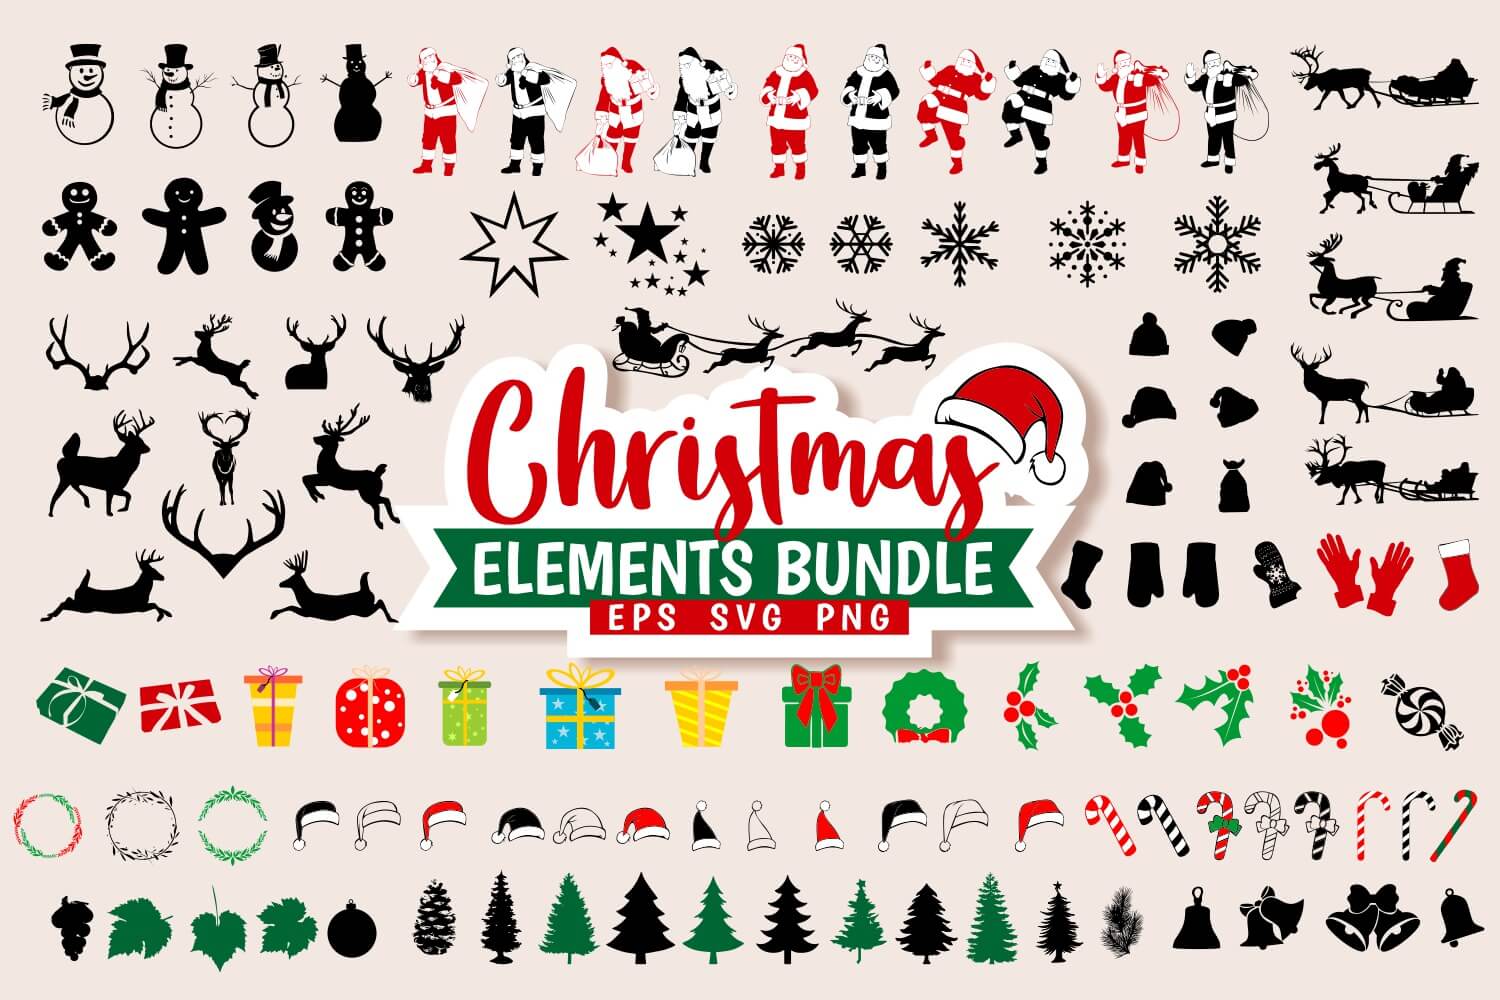 Christmas Bundle SVG Elements Vector Graphics 5369939 1 1